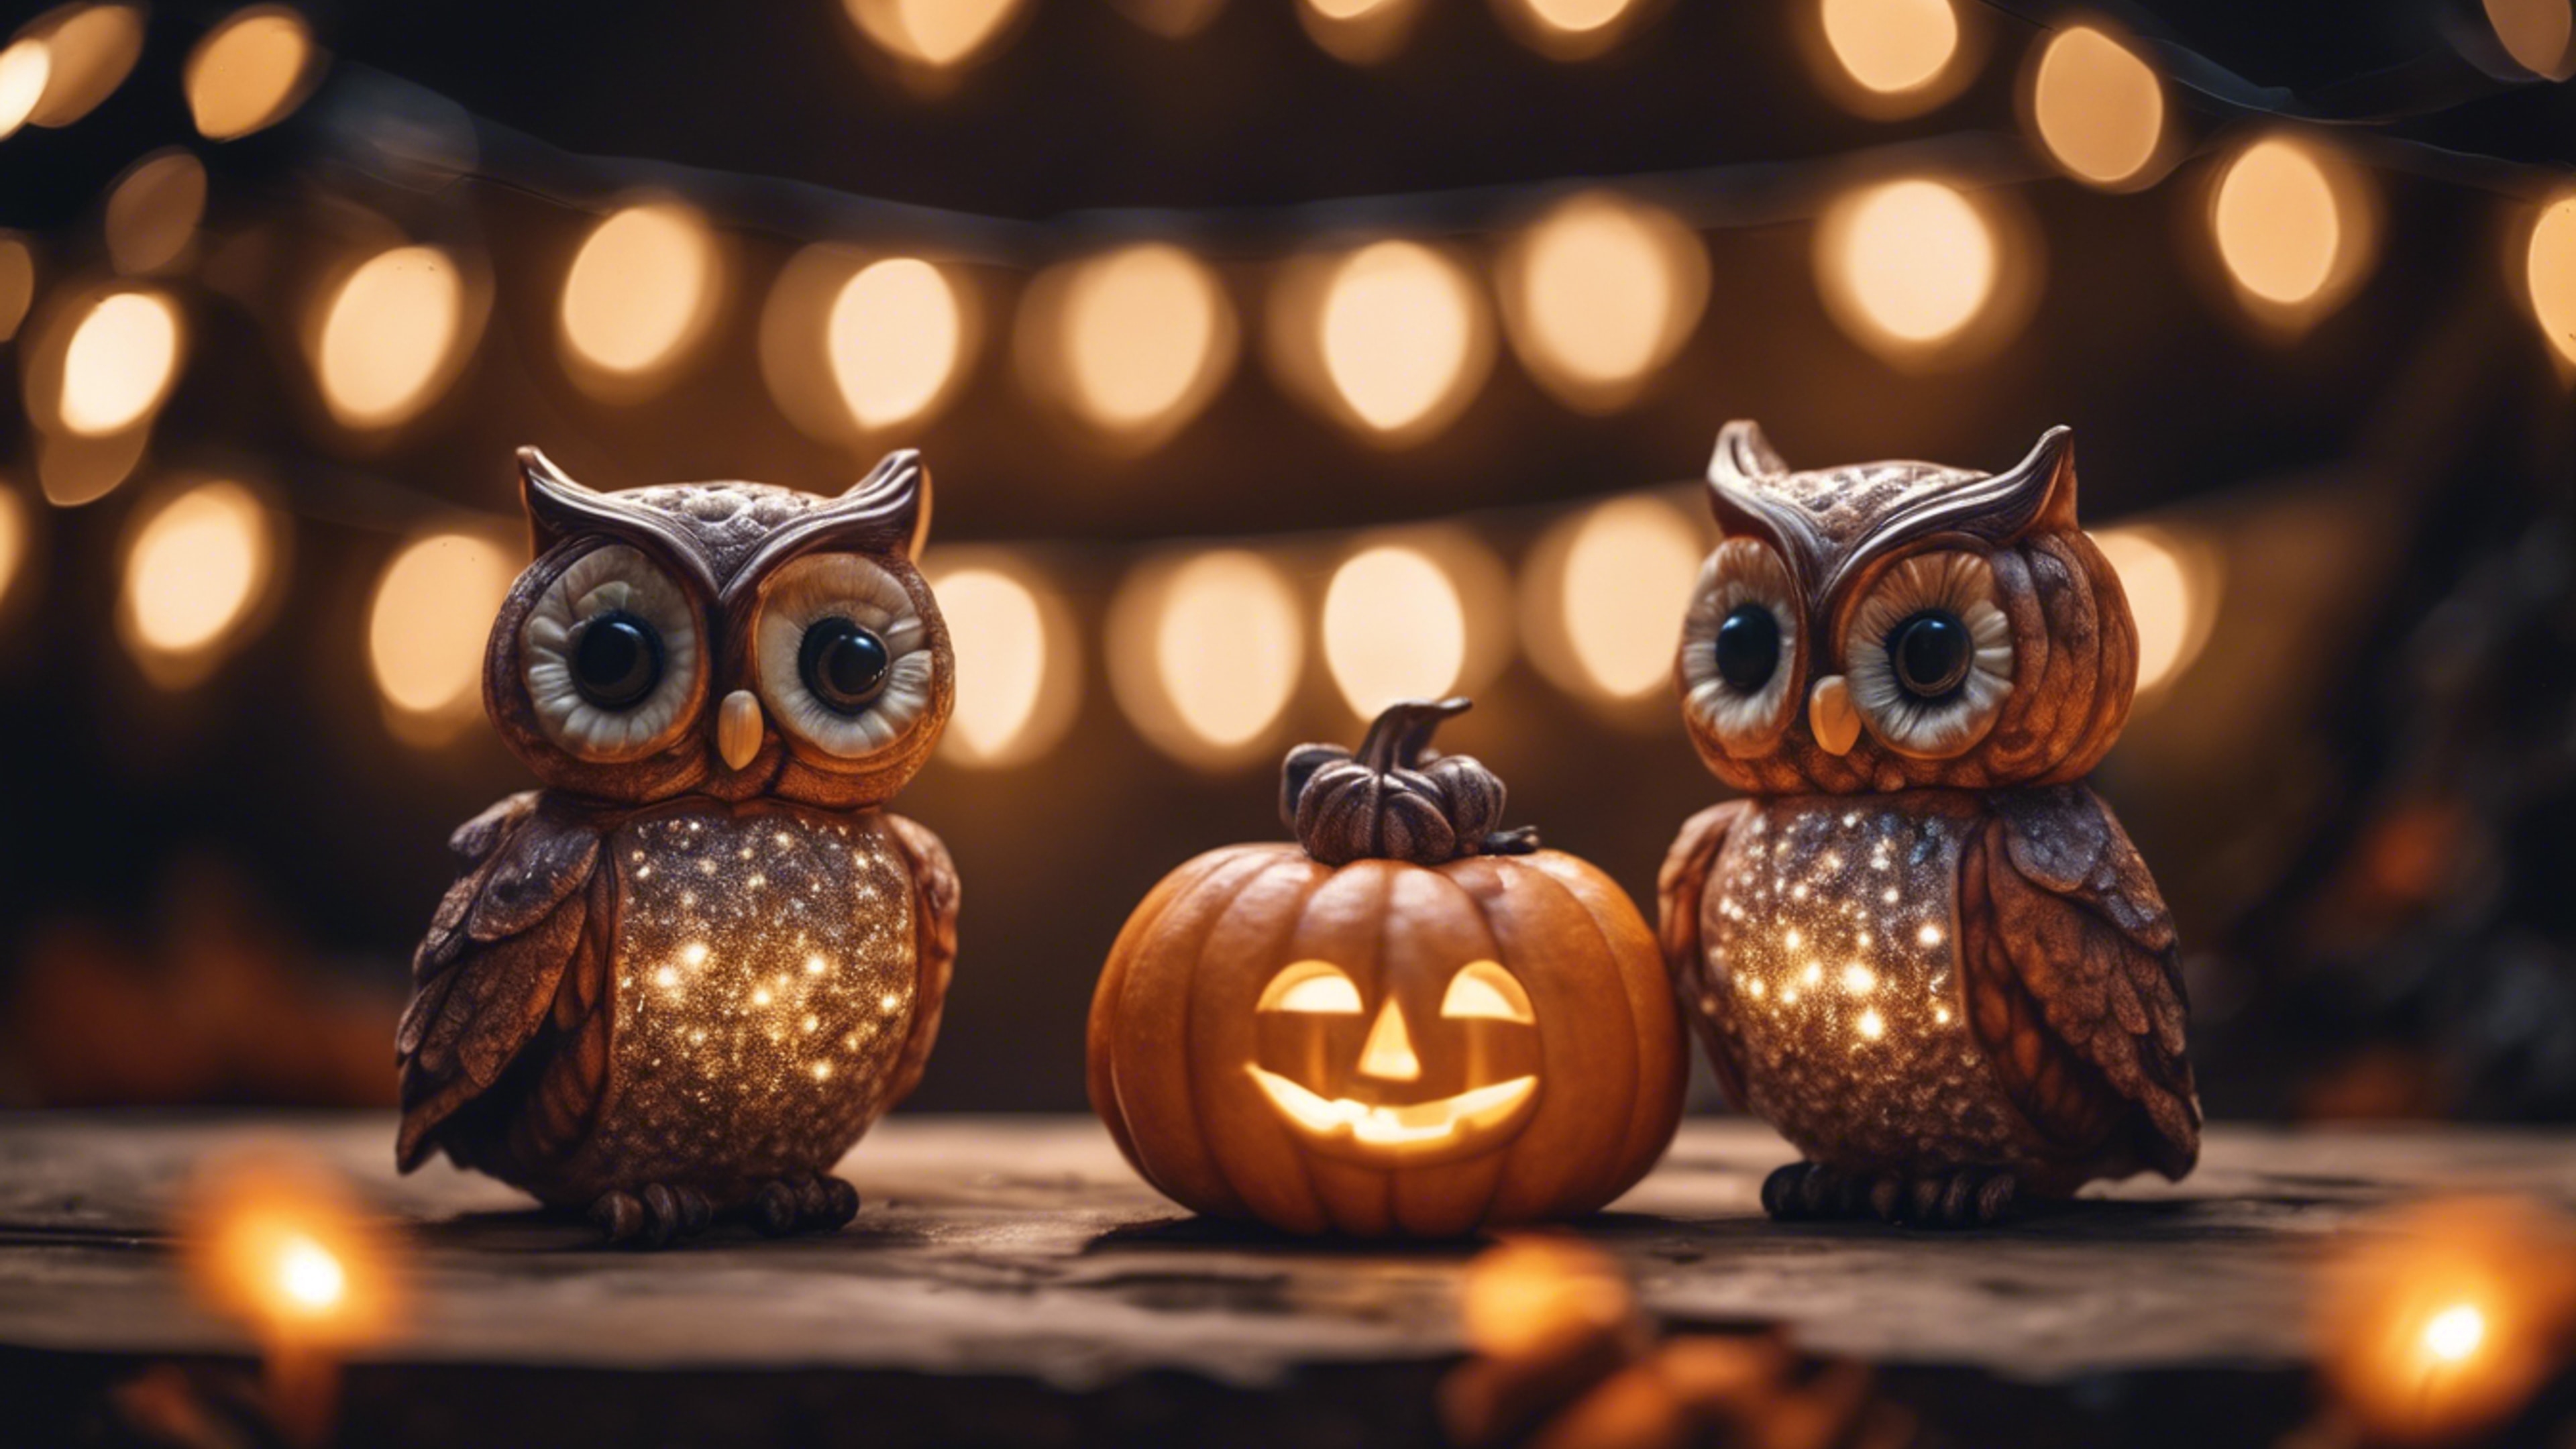 A pair of kawaii owls sitting on a pumpkin under twinkling fairy lights on Halloween night Tapetai[39849ffb0d78427c9221]